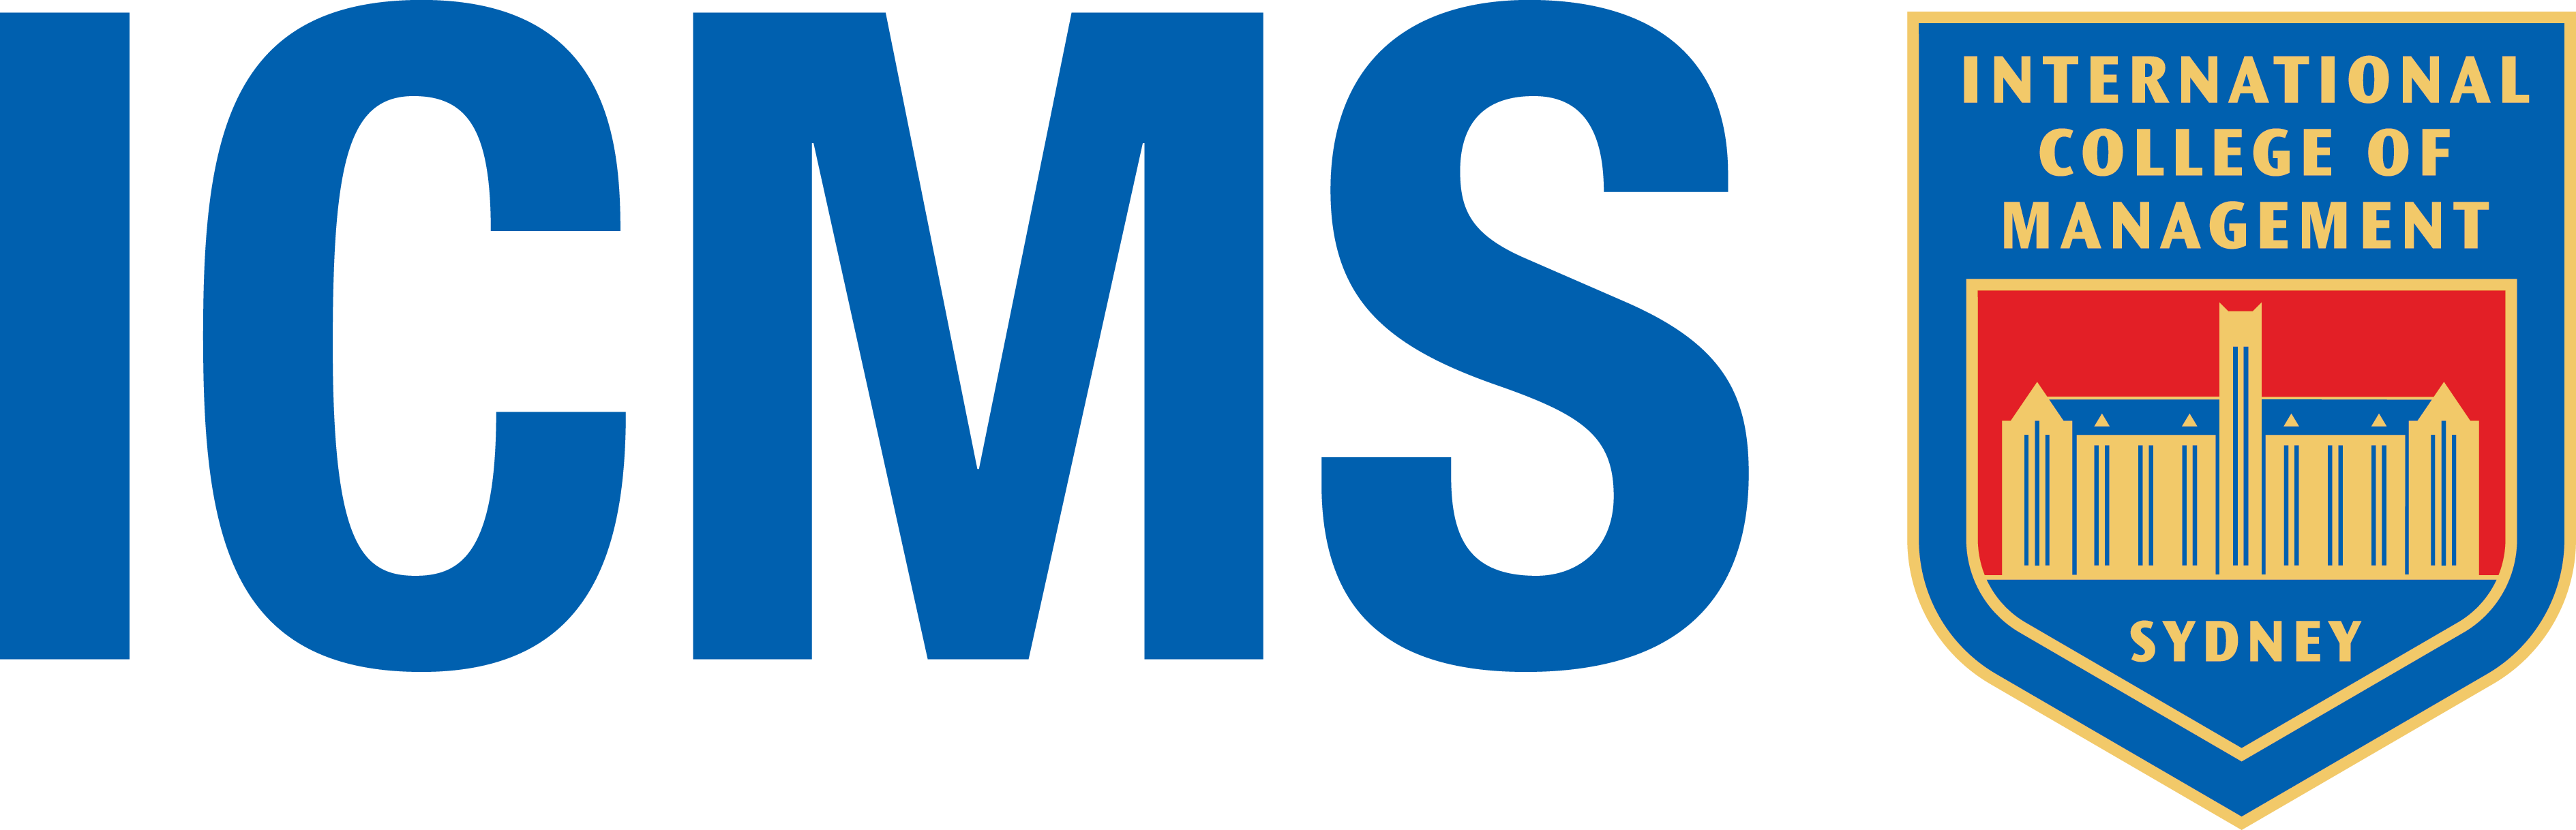 International College of Management Sydney logo